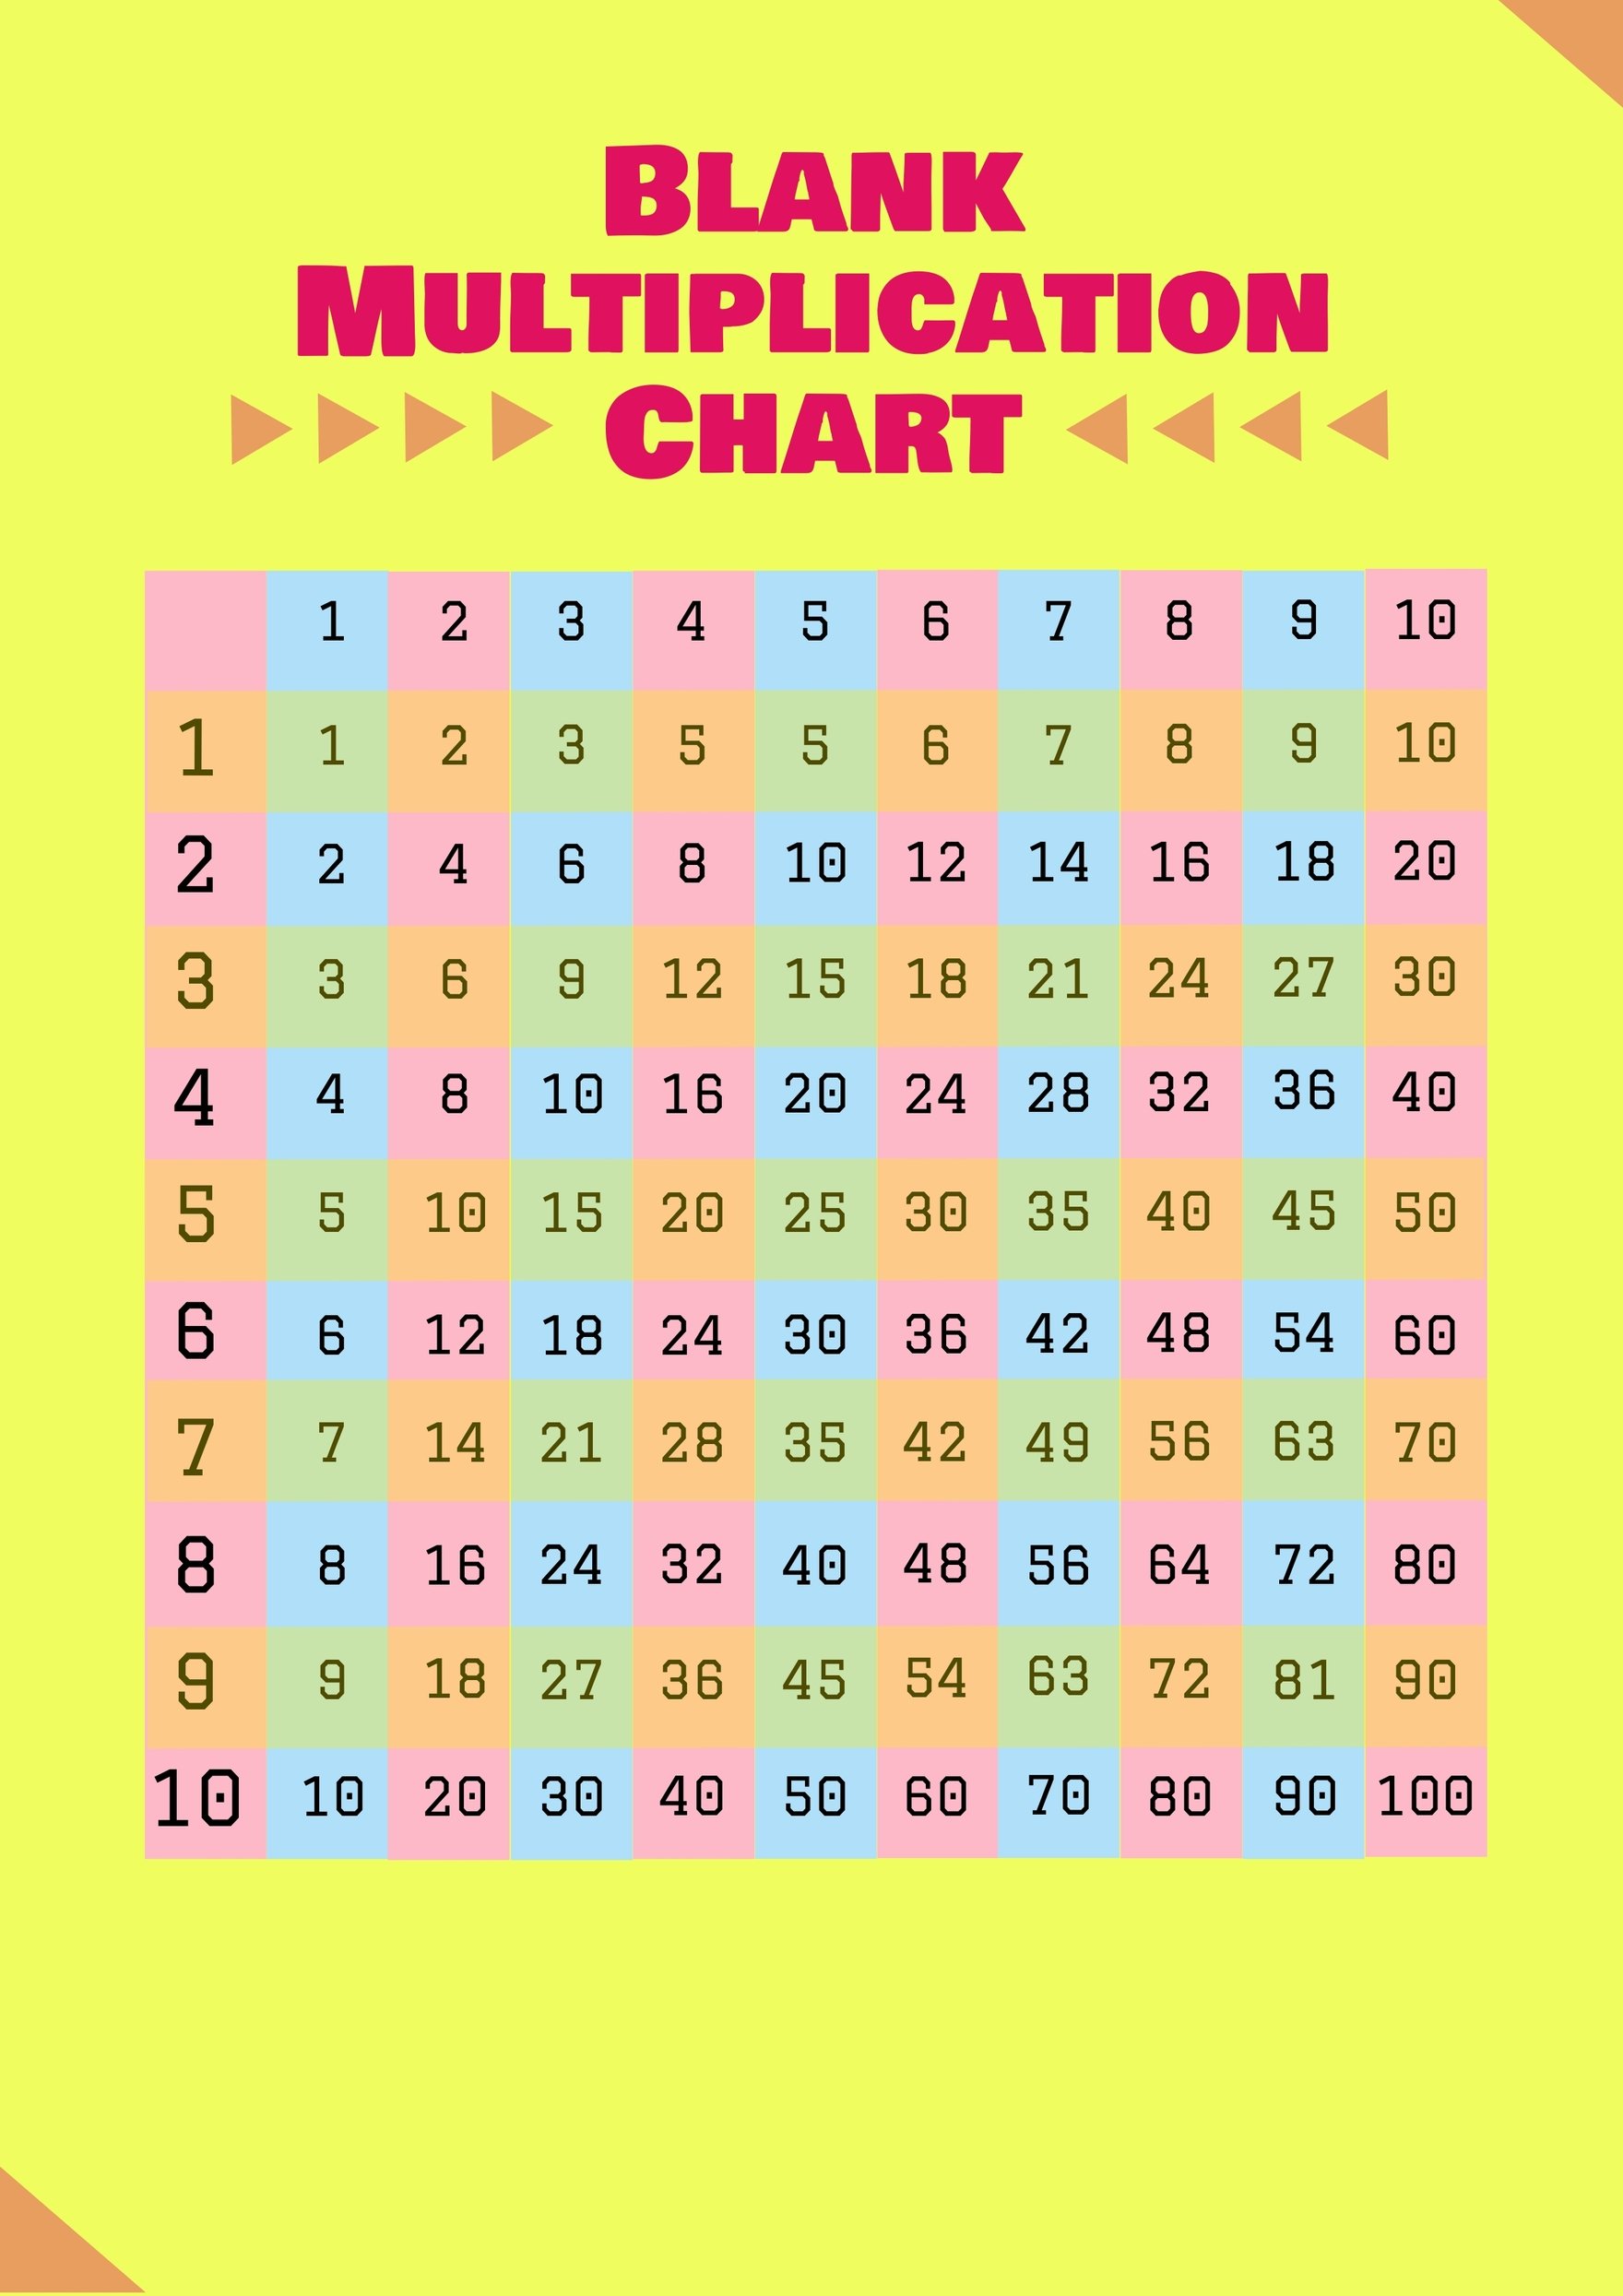 Blank Multiplication Chart in PDF, Illustrator